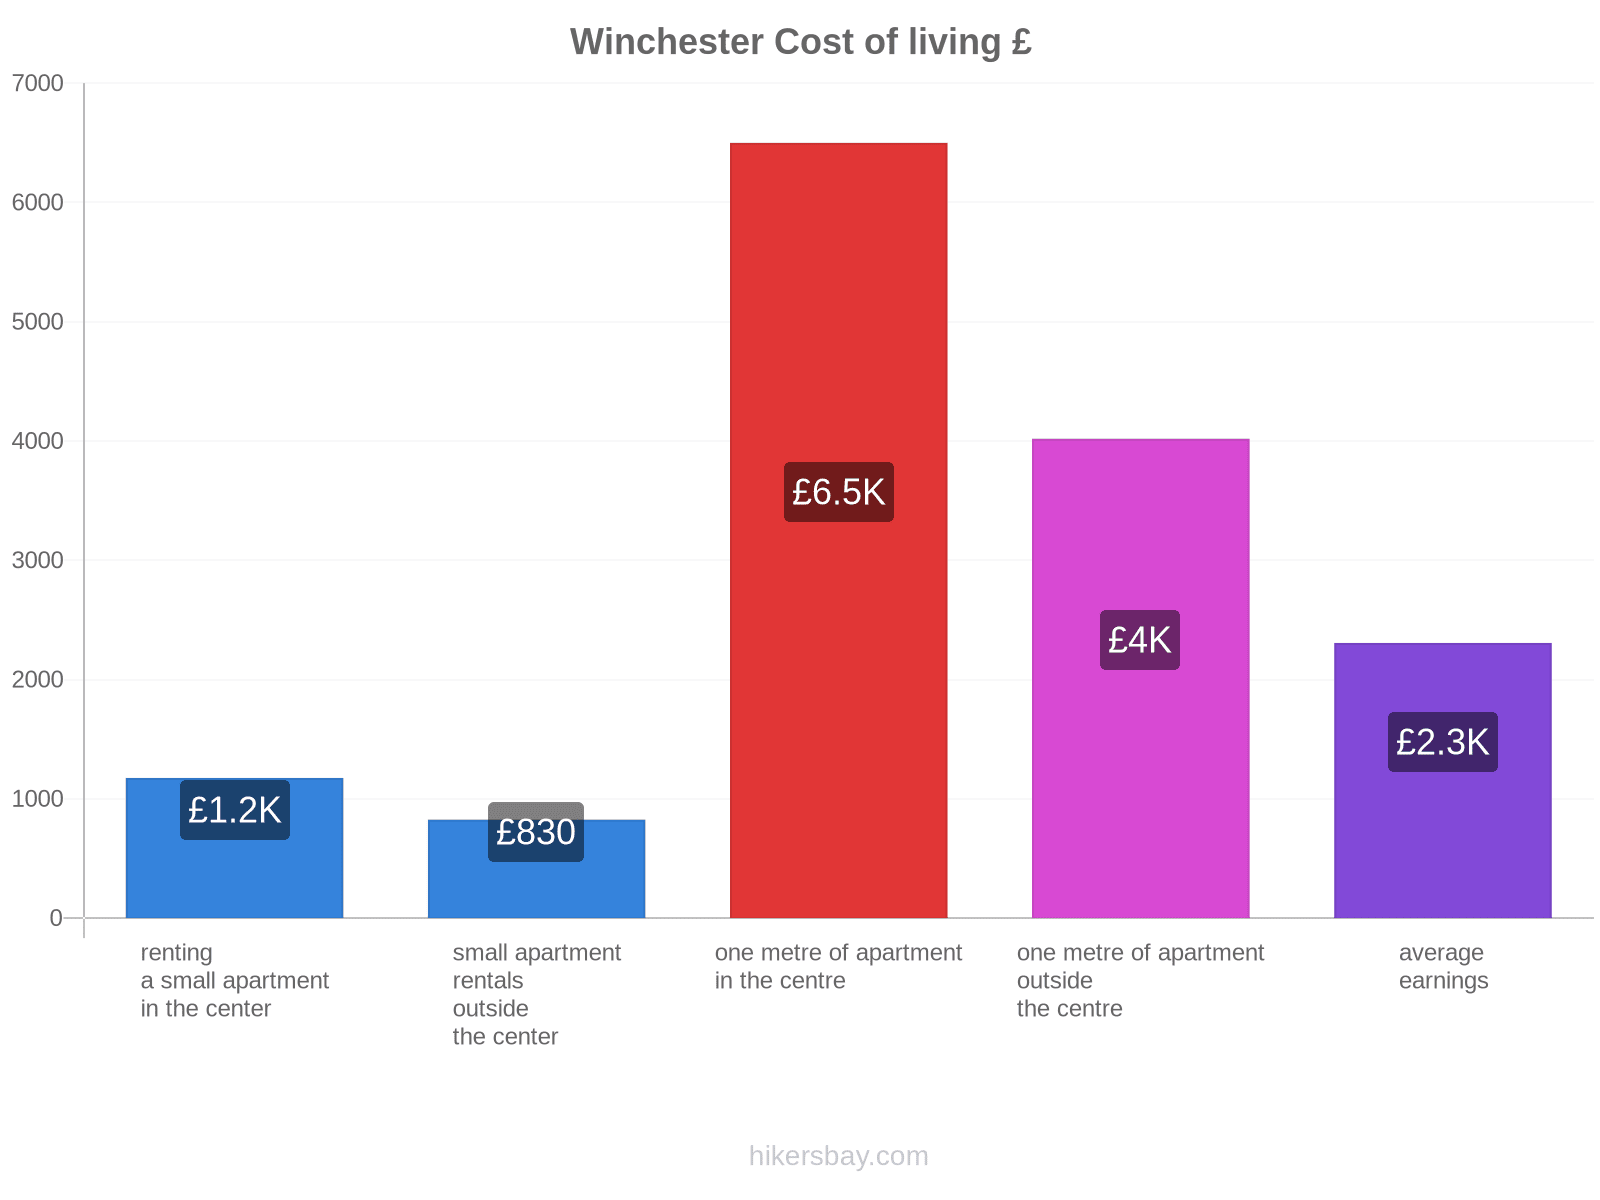 Winchester cost of living hikersbay.com